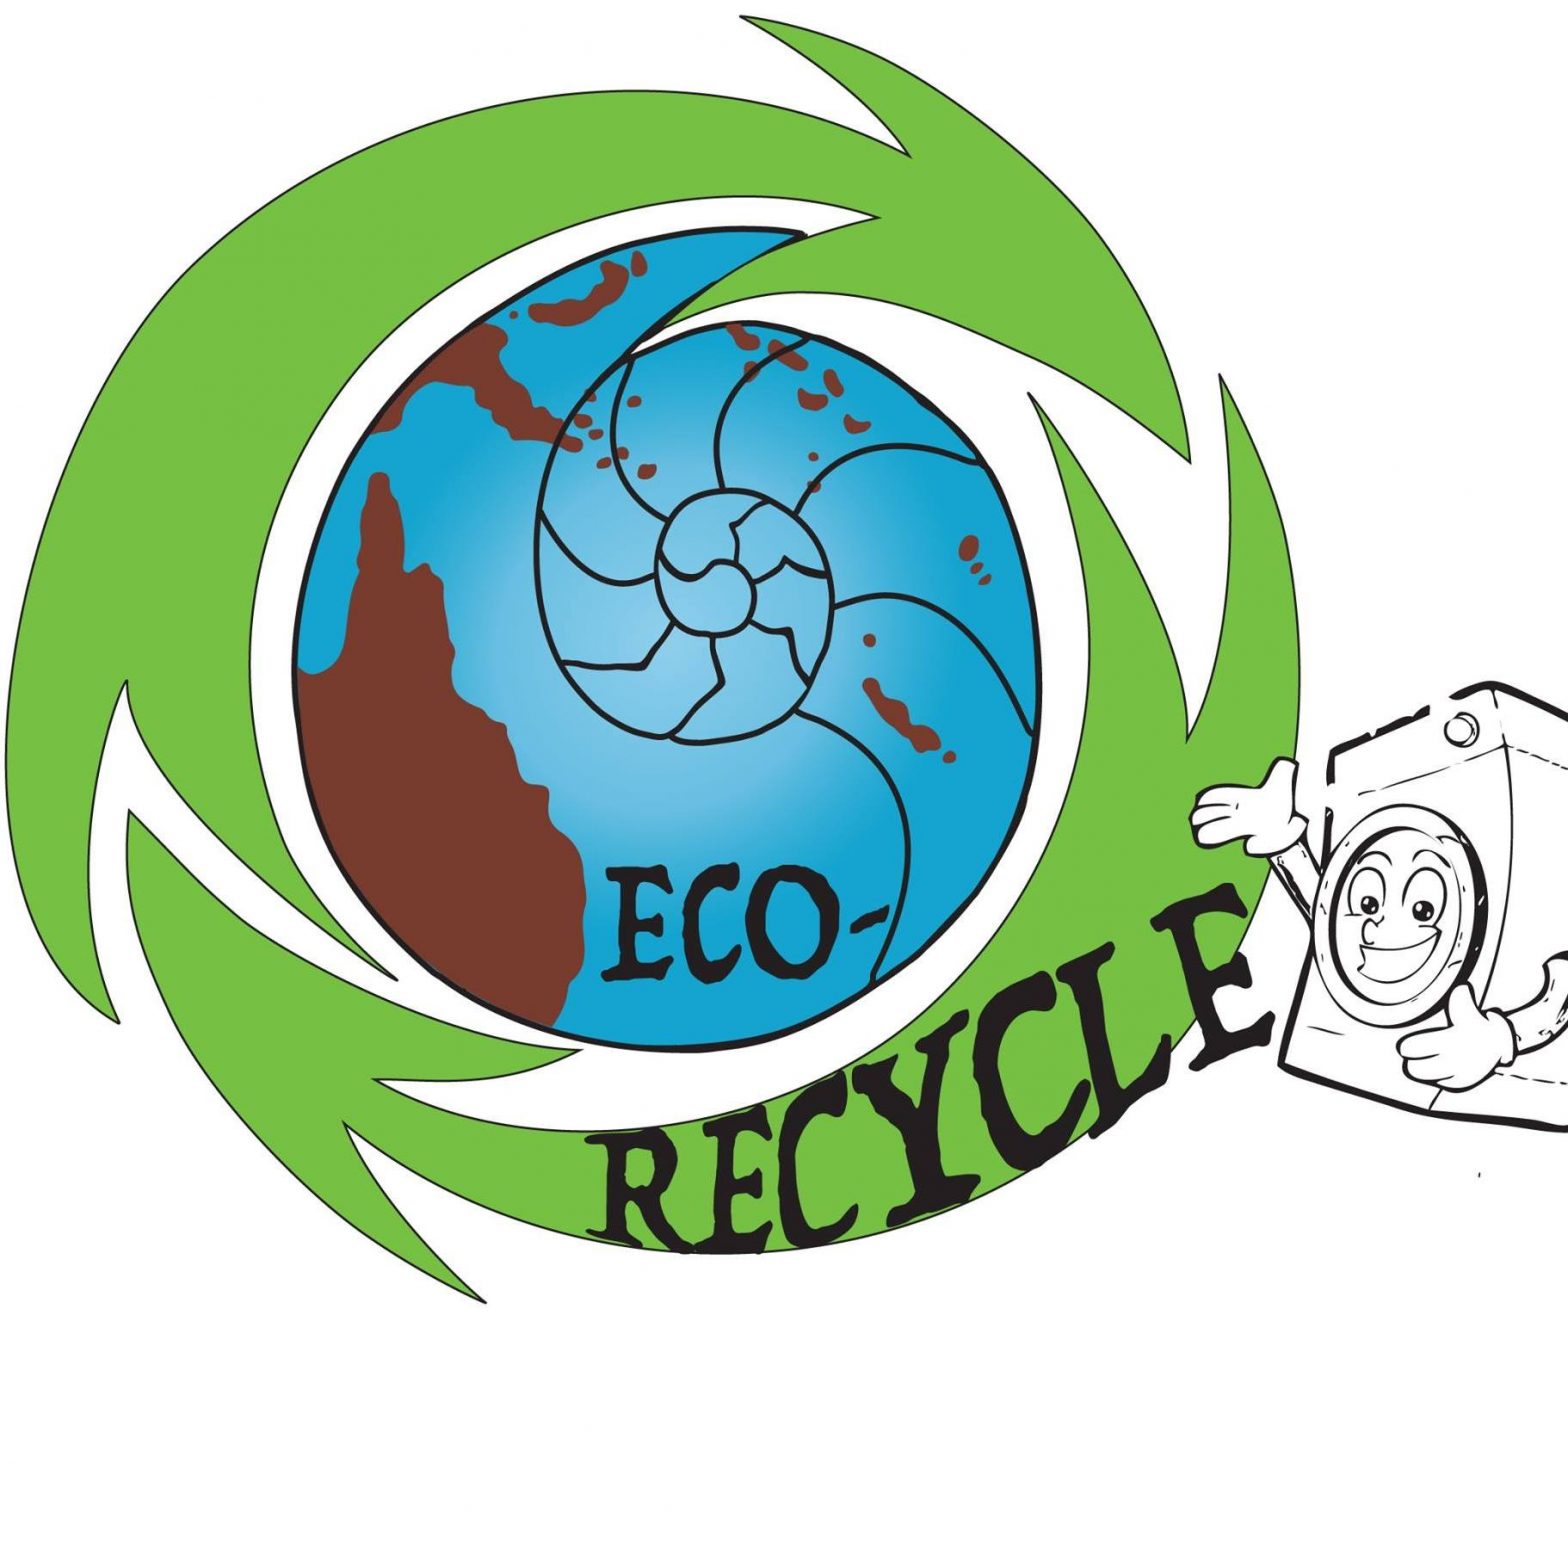 Eco recycle